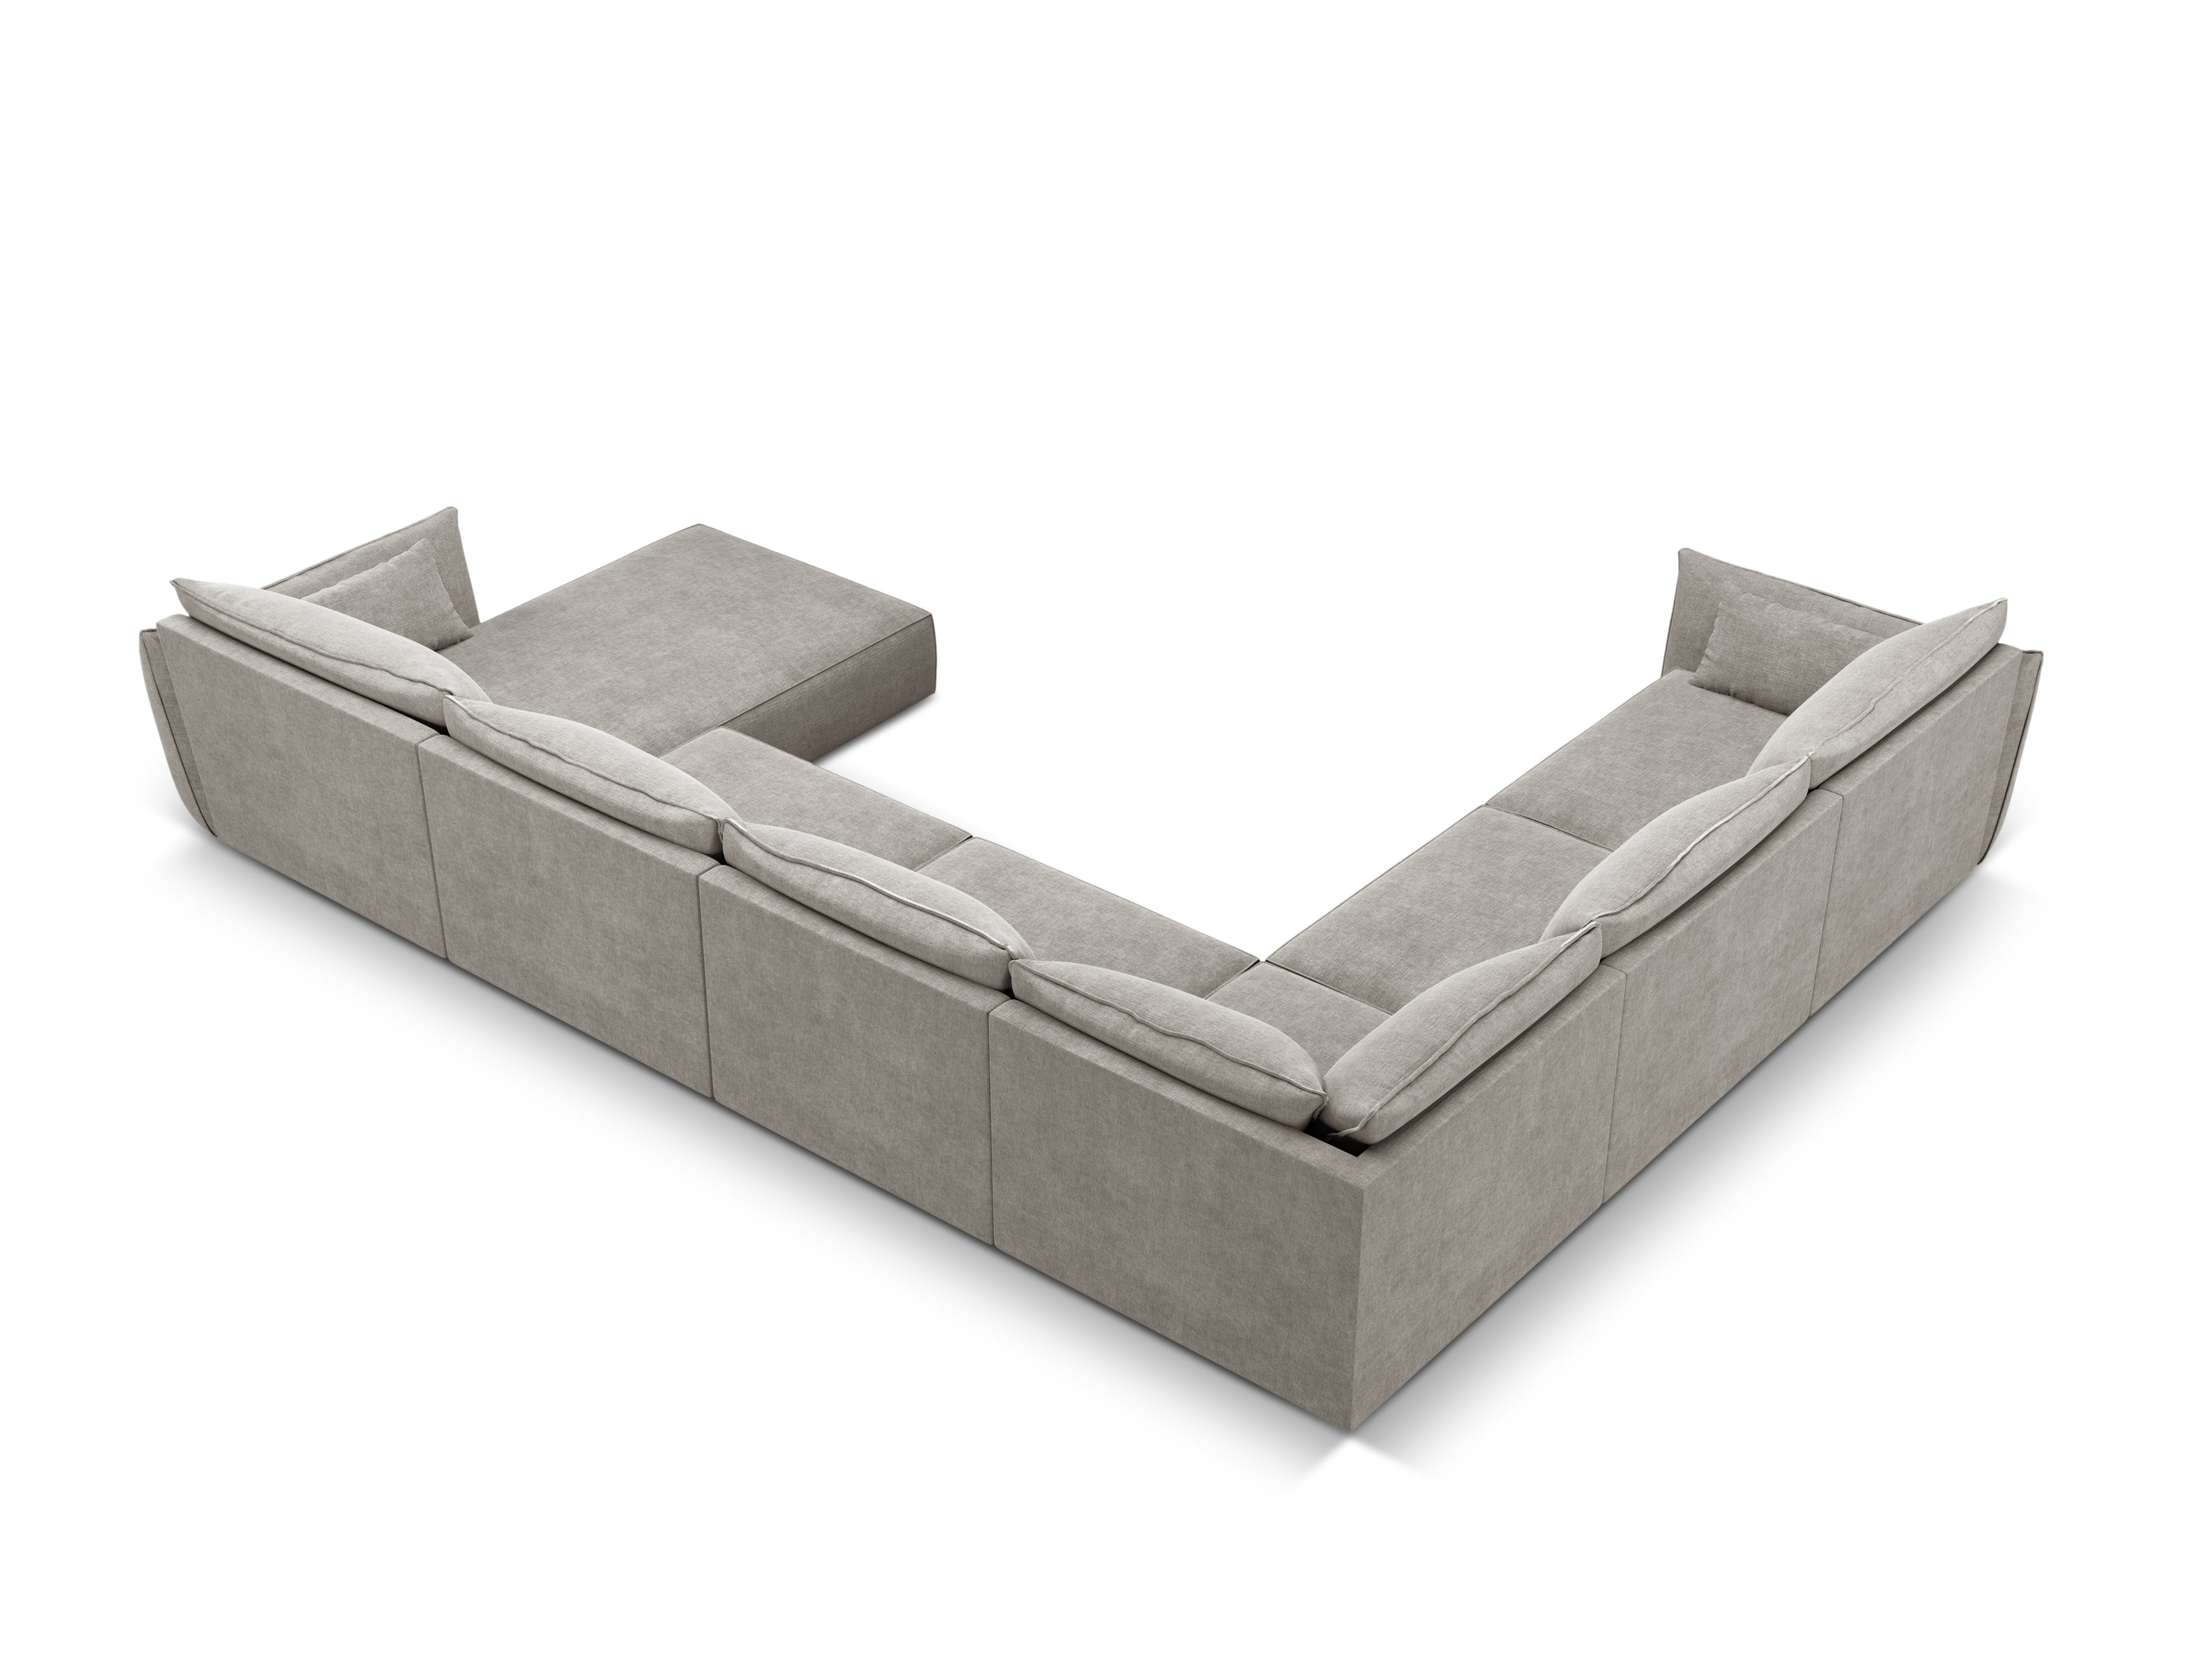 Panoramic Left Corner Sofa, "Vanda", 8 Seats, 384x284x85
Made in Europe, Mazzini Sofas, Eye on Design